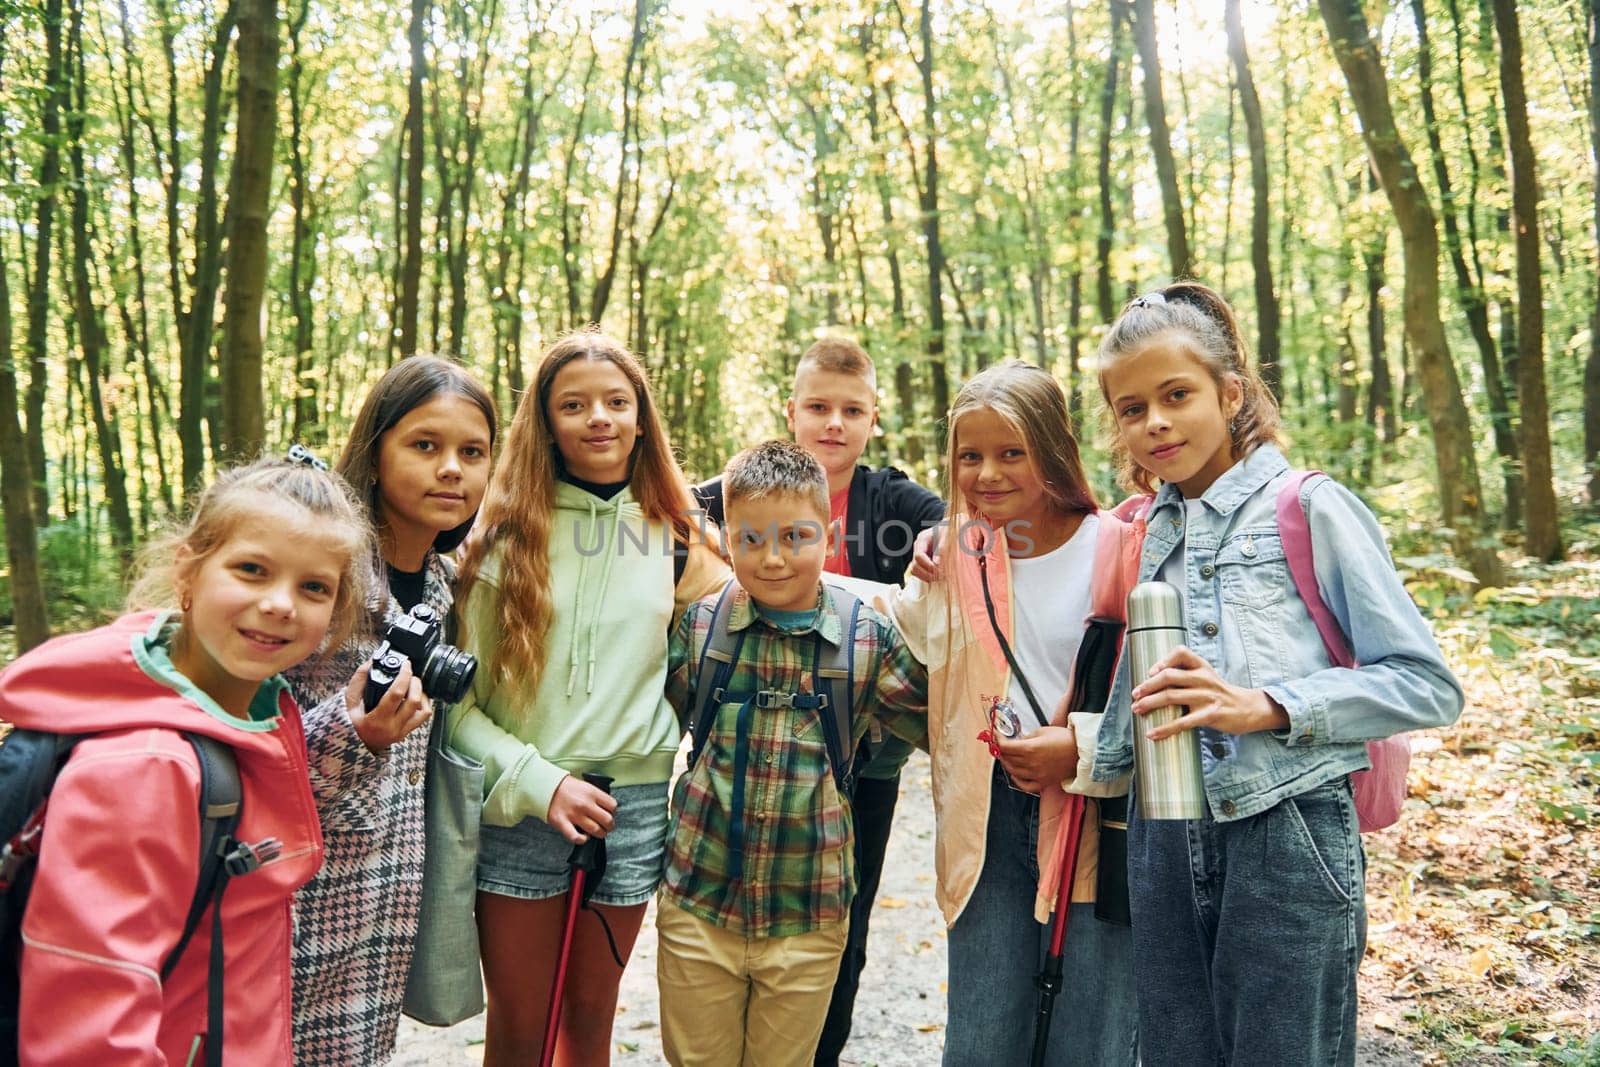 Standing together. Kids in green forest at summer daytime together.